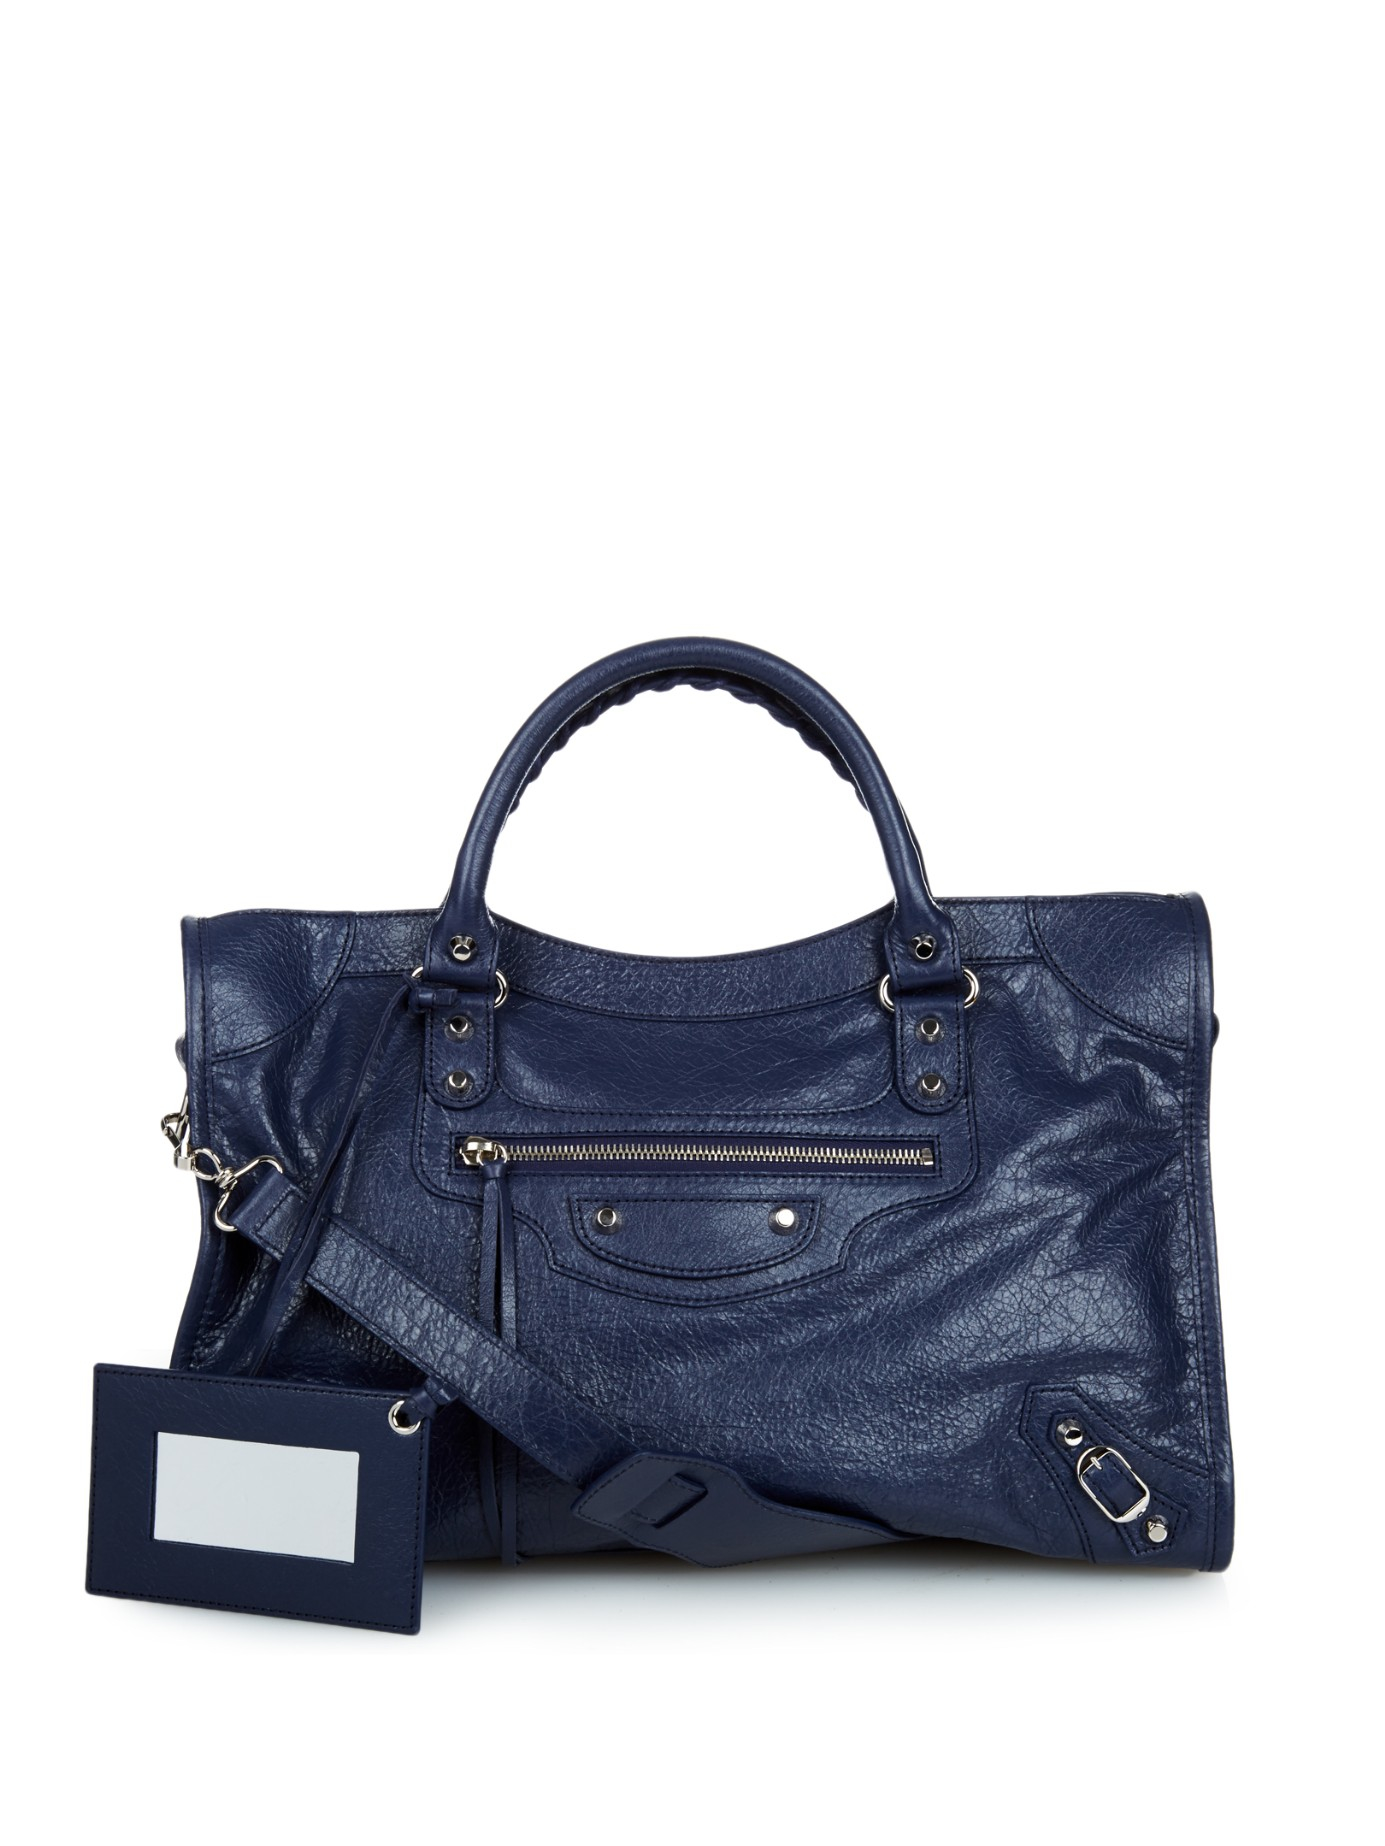 Balenciaga Classic City Leather Bag in Blue | Lyst